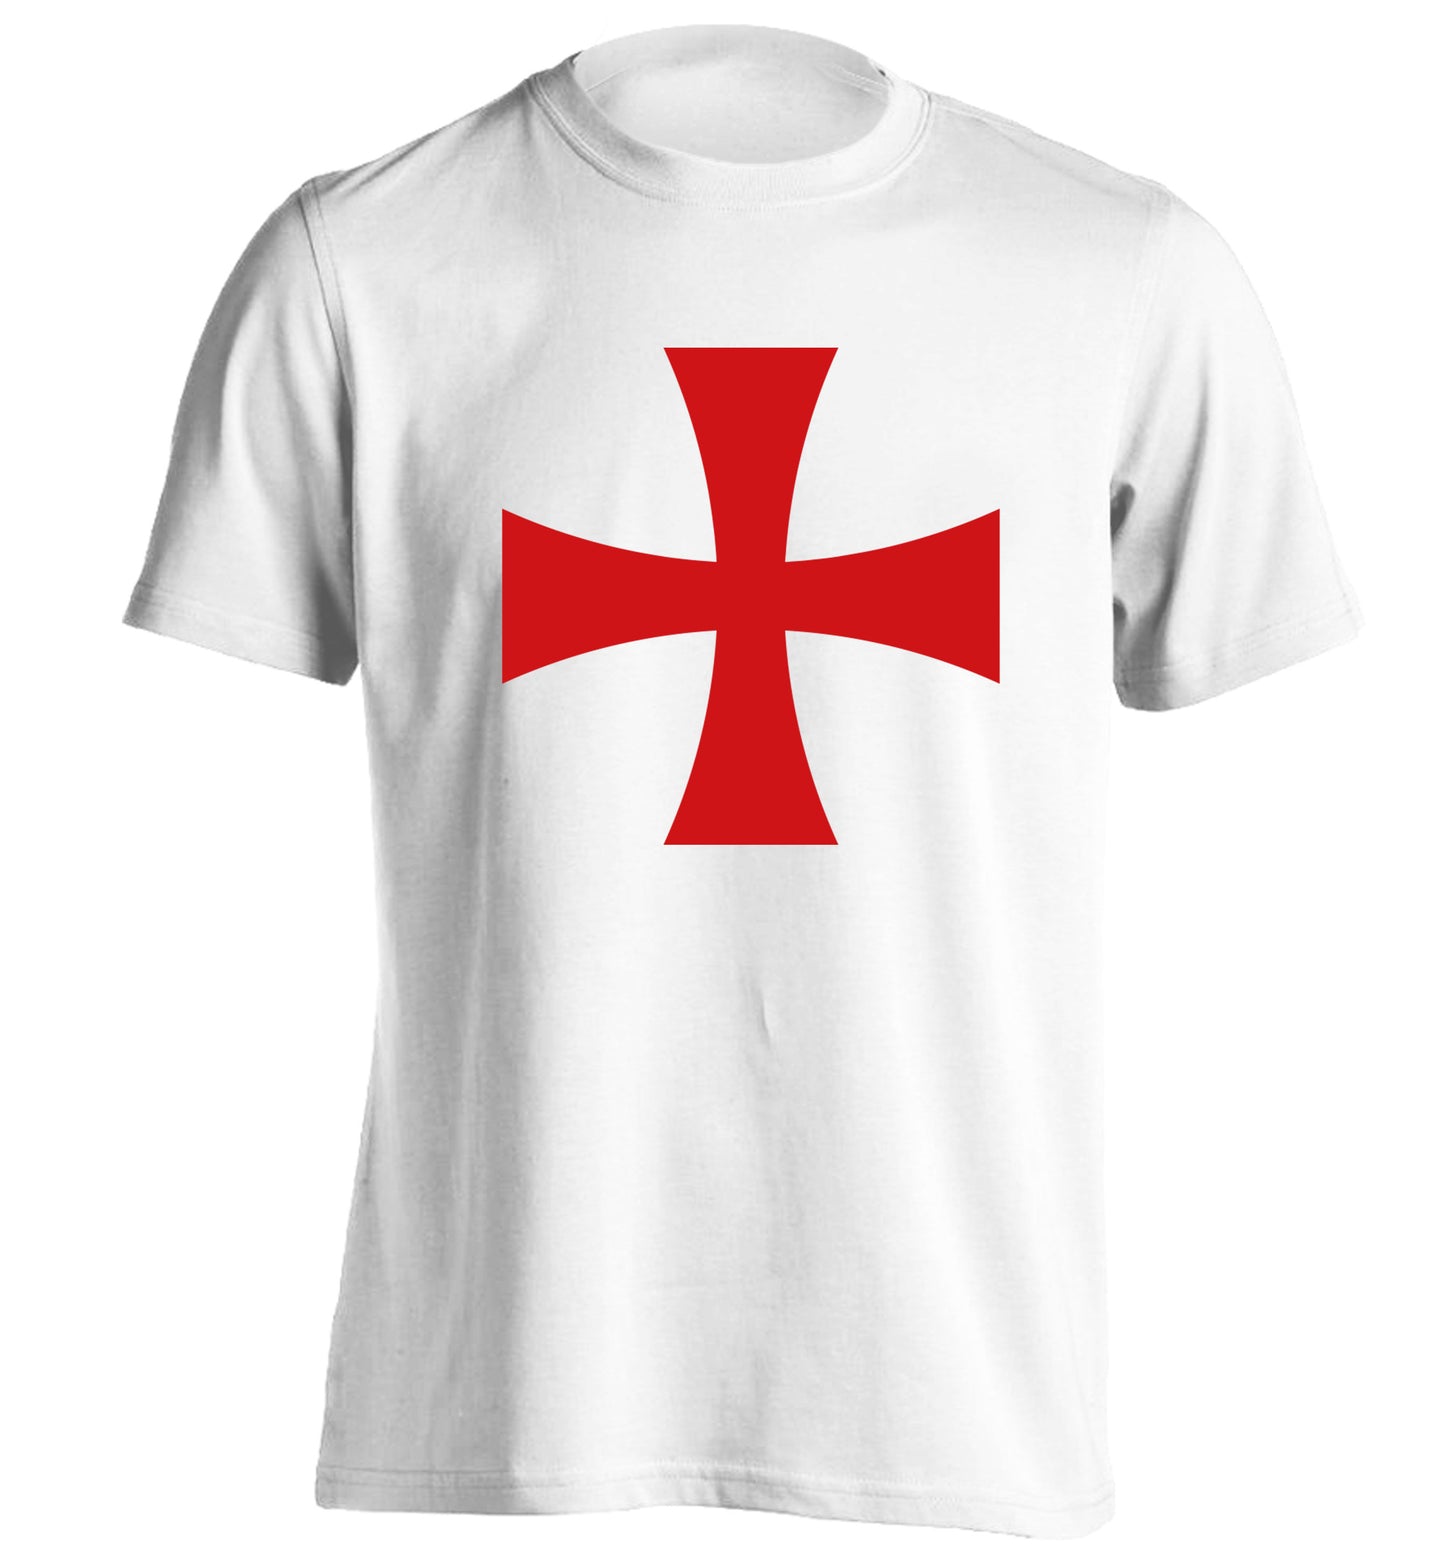 Knights Templar cross adults unisex white Tshirt 2XL